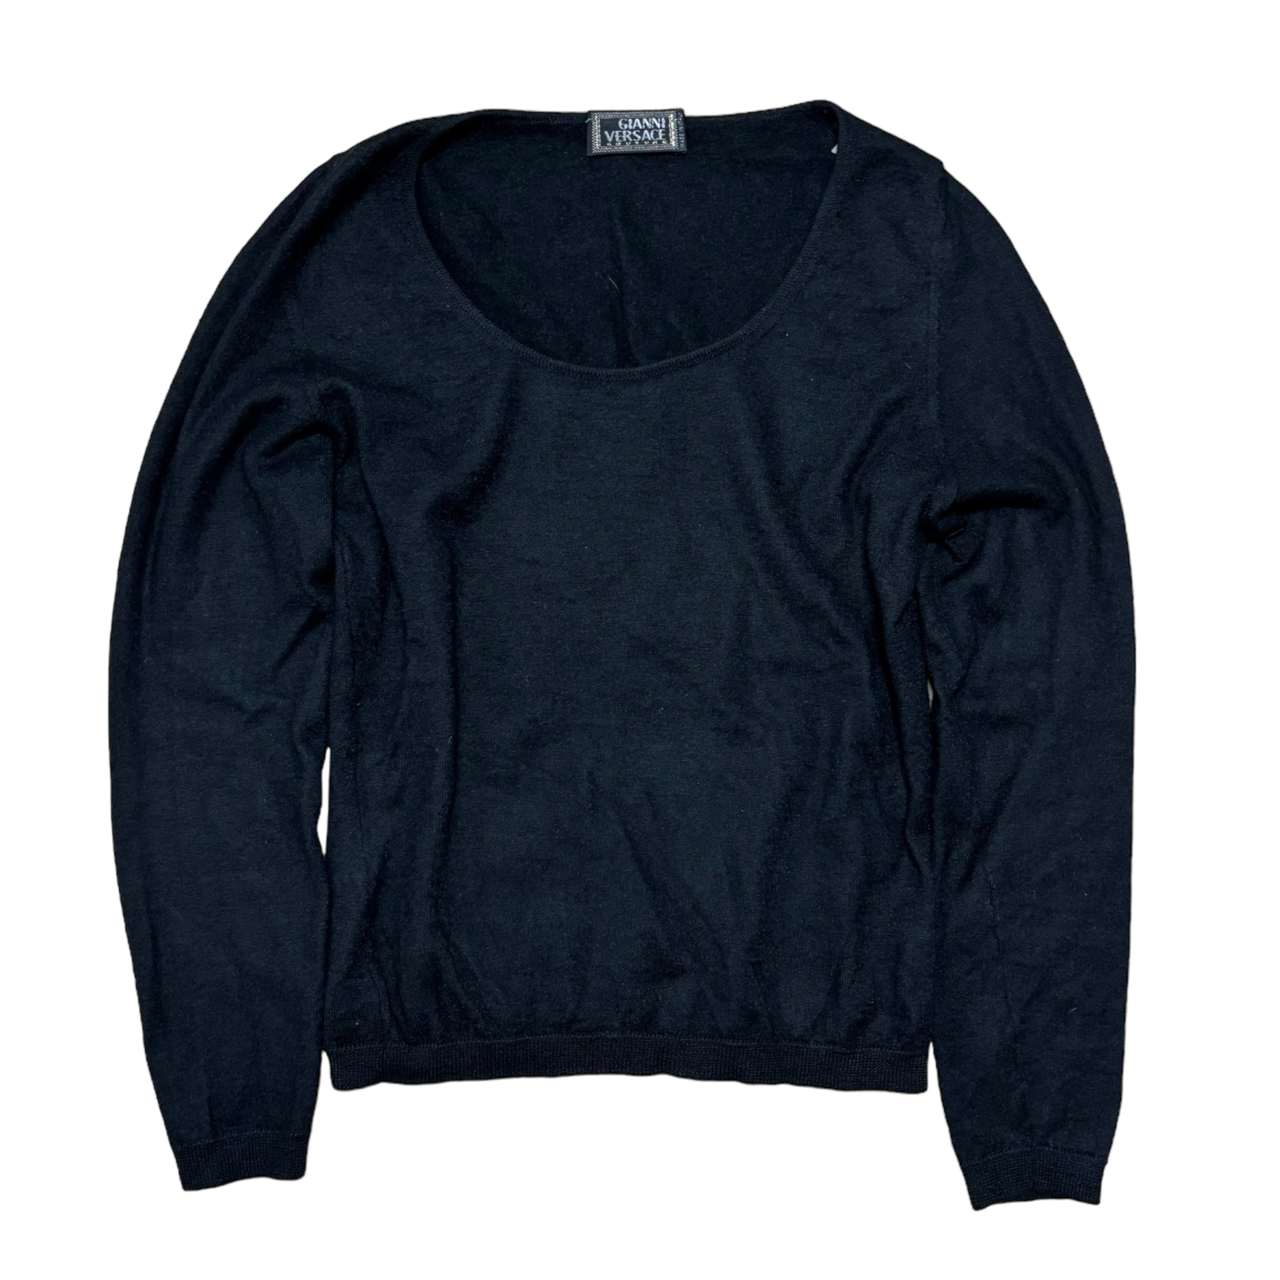 Gianni Versace, Black Cashmere Top (XS)